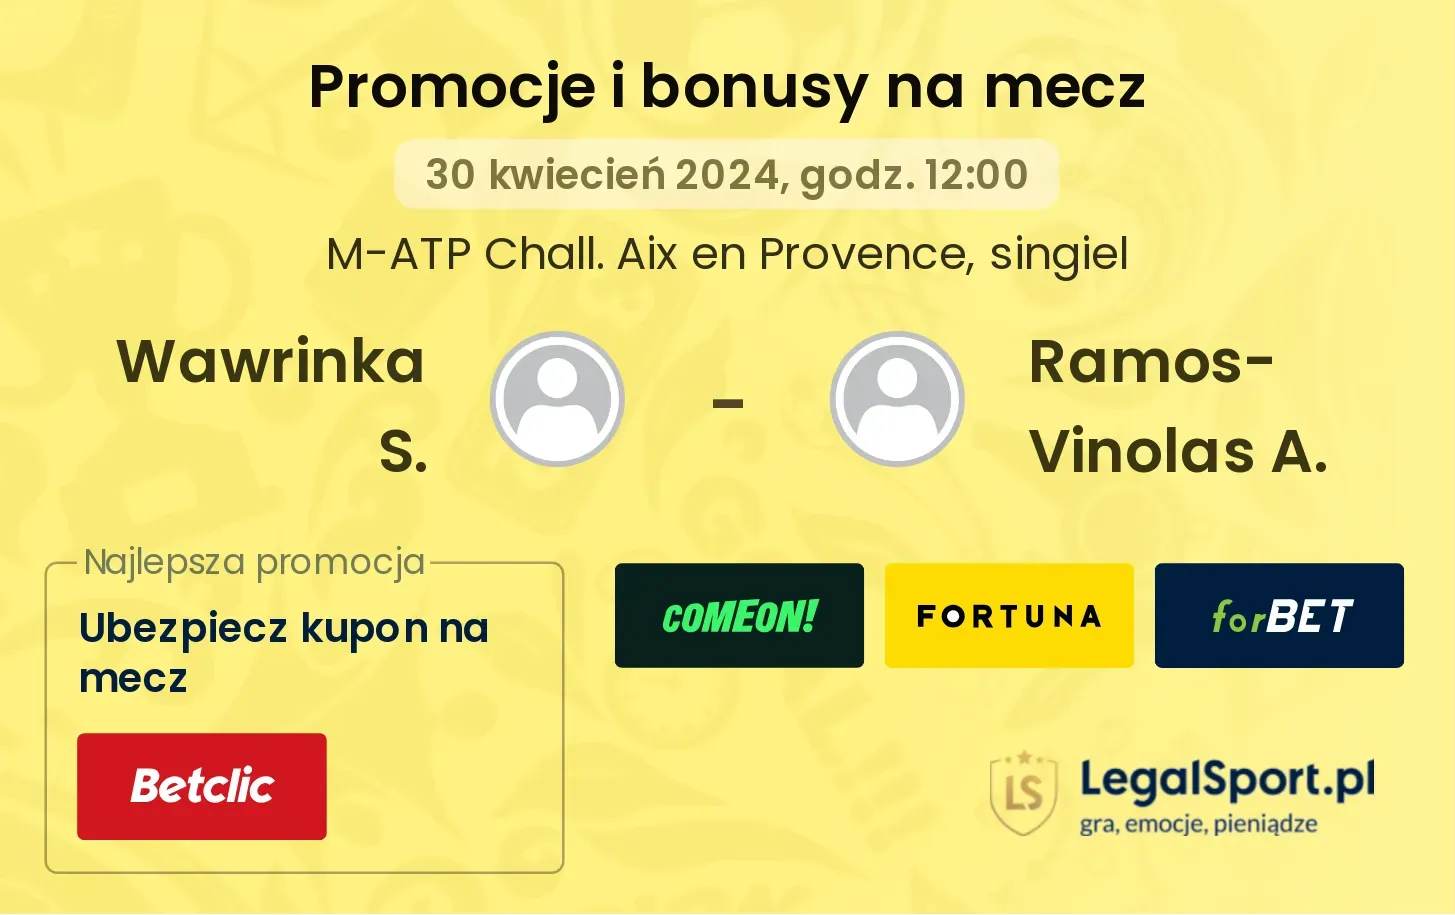 Wawrinka S. - Ramos-Vinolas A. promocje bonusy na mecz